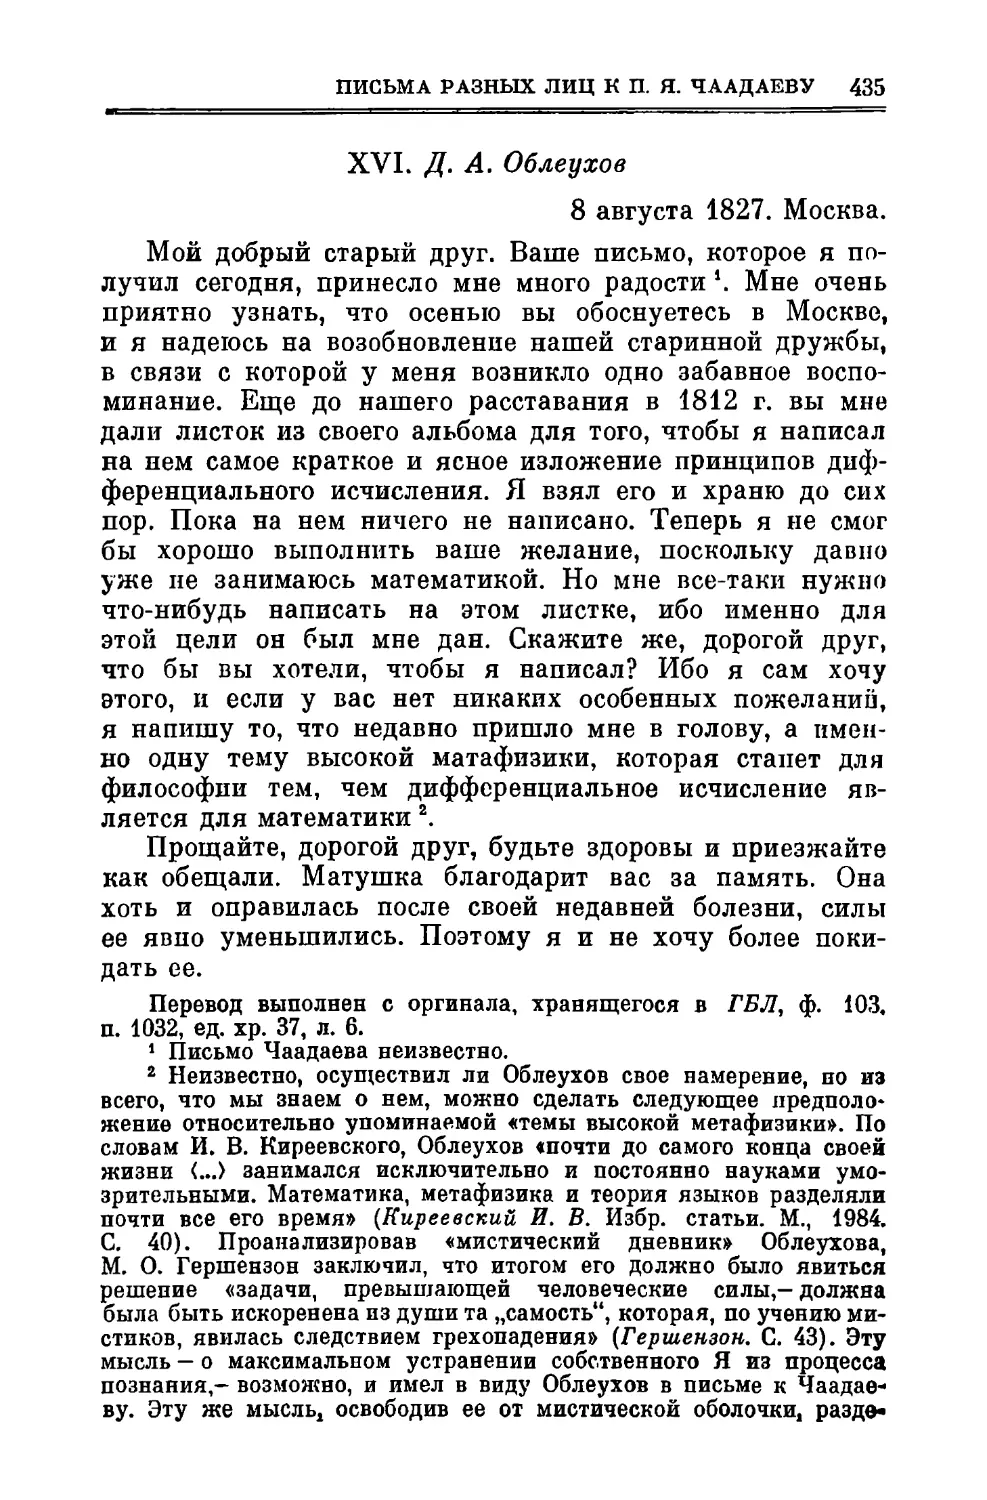 XVI. Облеухов Д.А. 8.VIII.1827